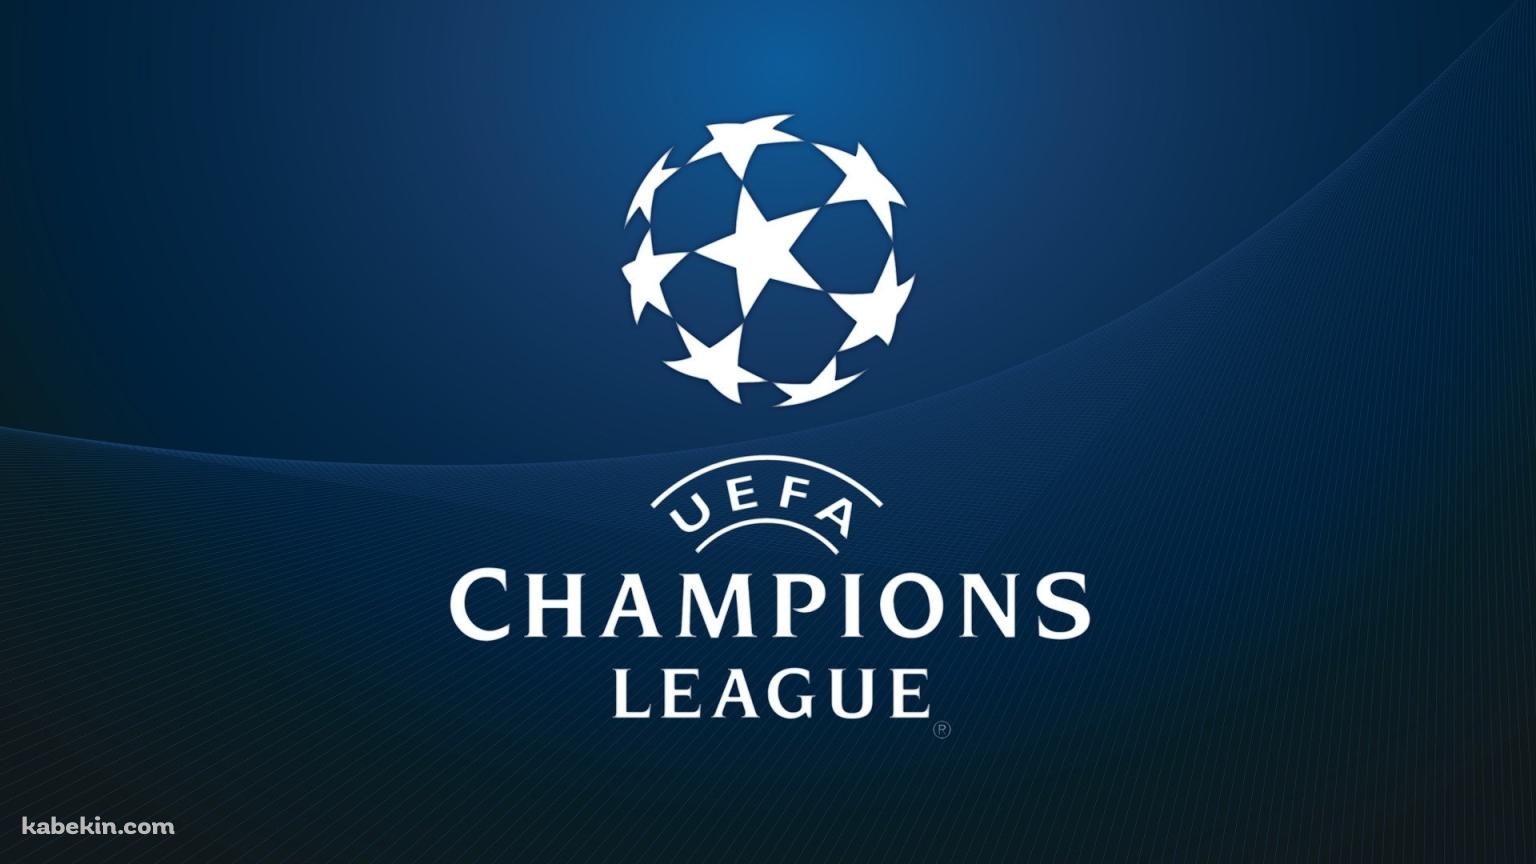 UEFA CHAMPIONS LEAGUEの壁紙(1536px x 864px) 高画質 PC・デスクトップ用